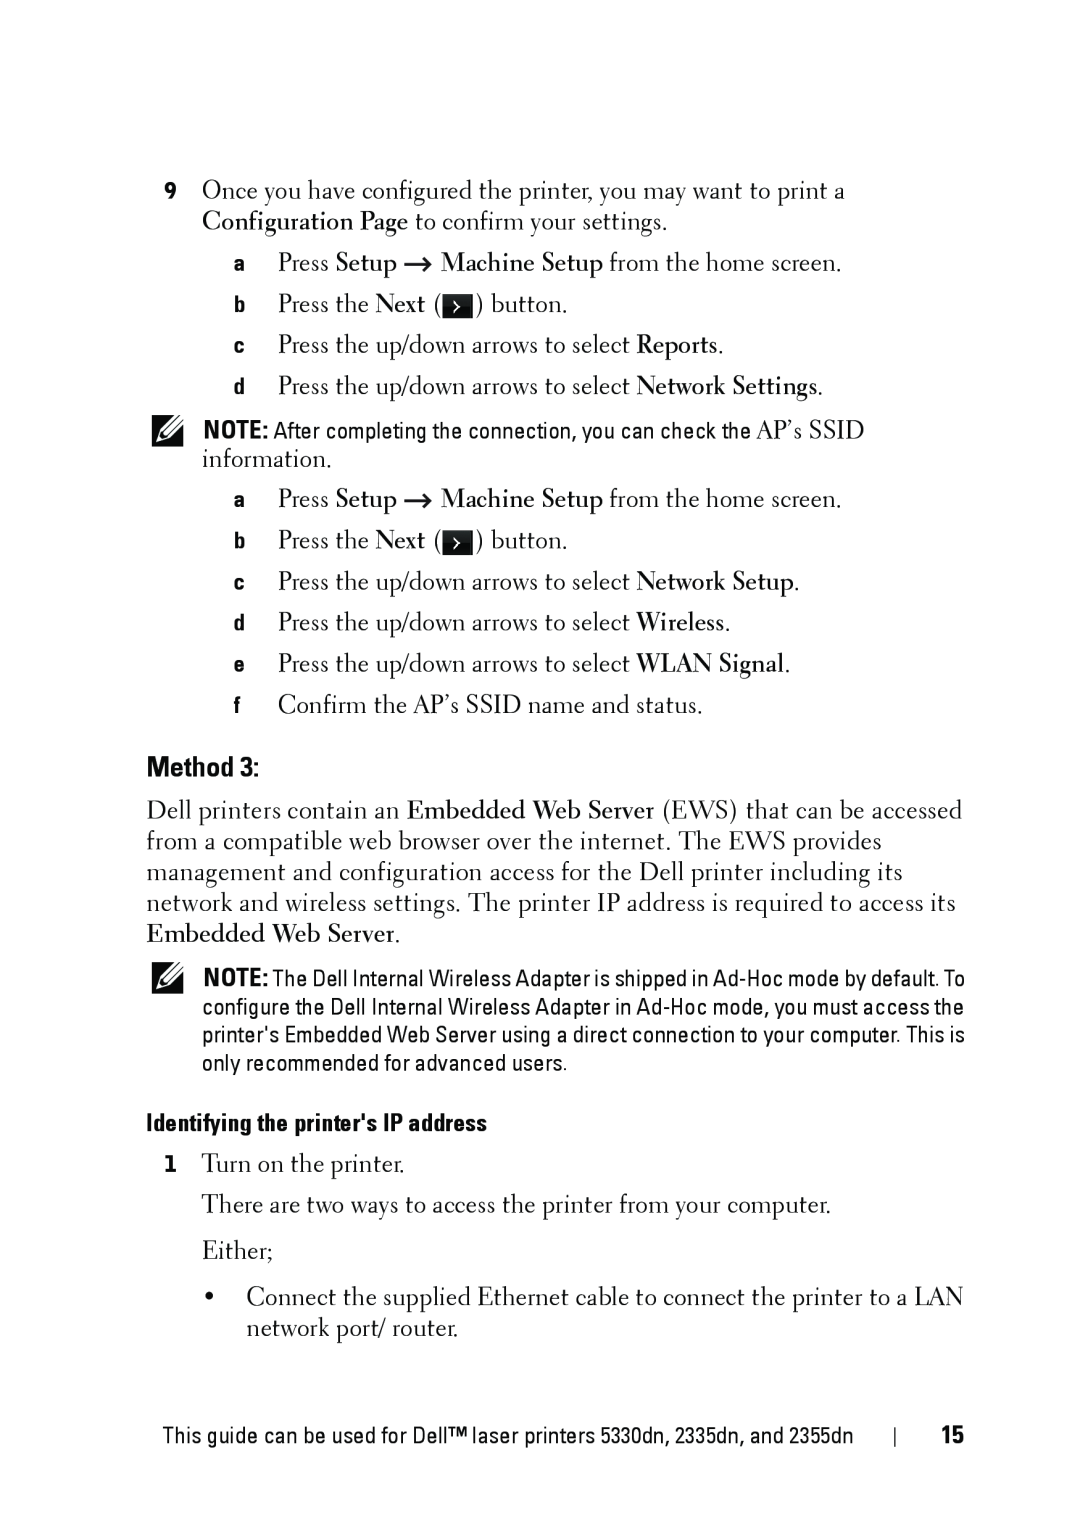 Dell 5002 manual Identifying the printers IP address, Method 